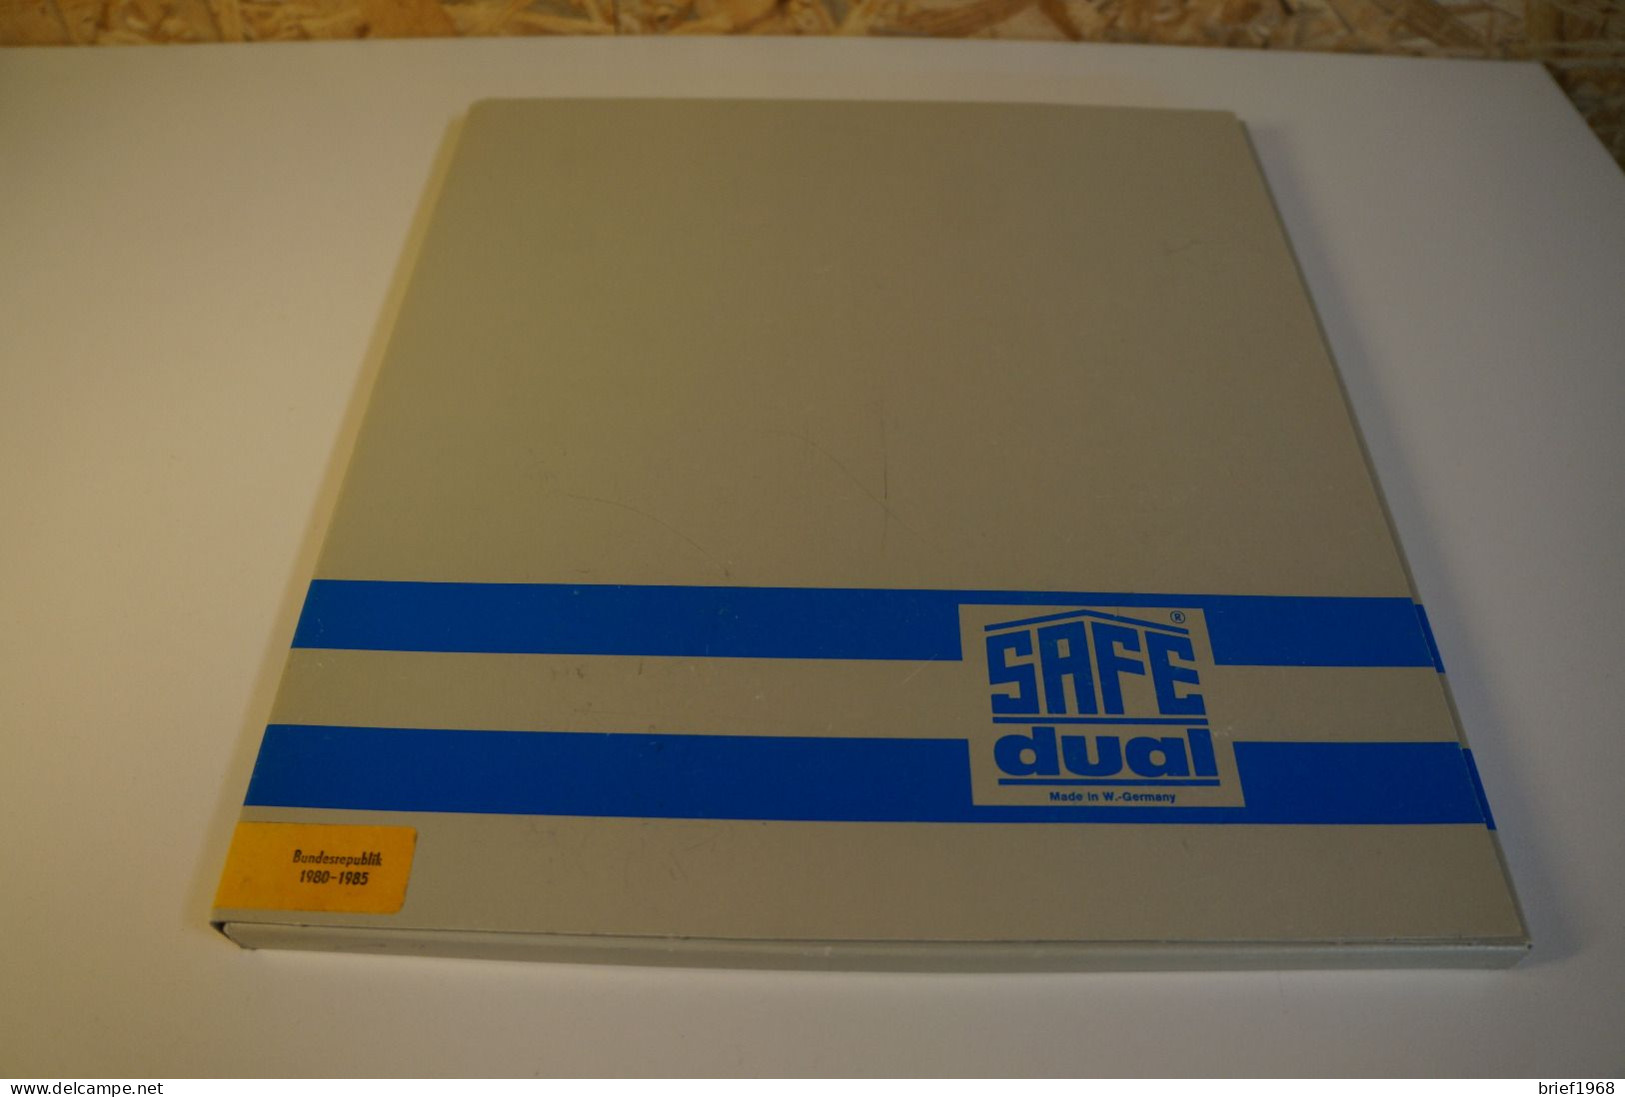 Bund Safe Dual 1980-1985 (27964) - Pre-printed Pages